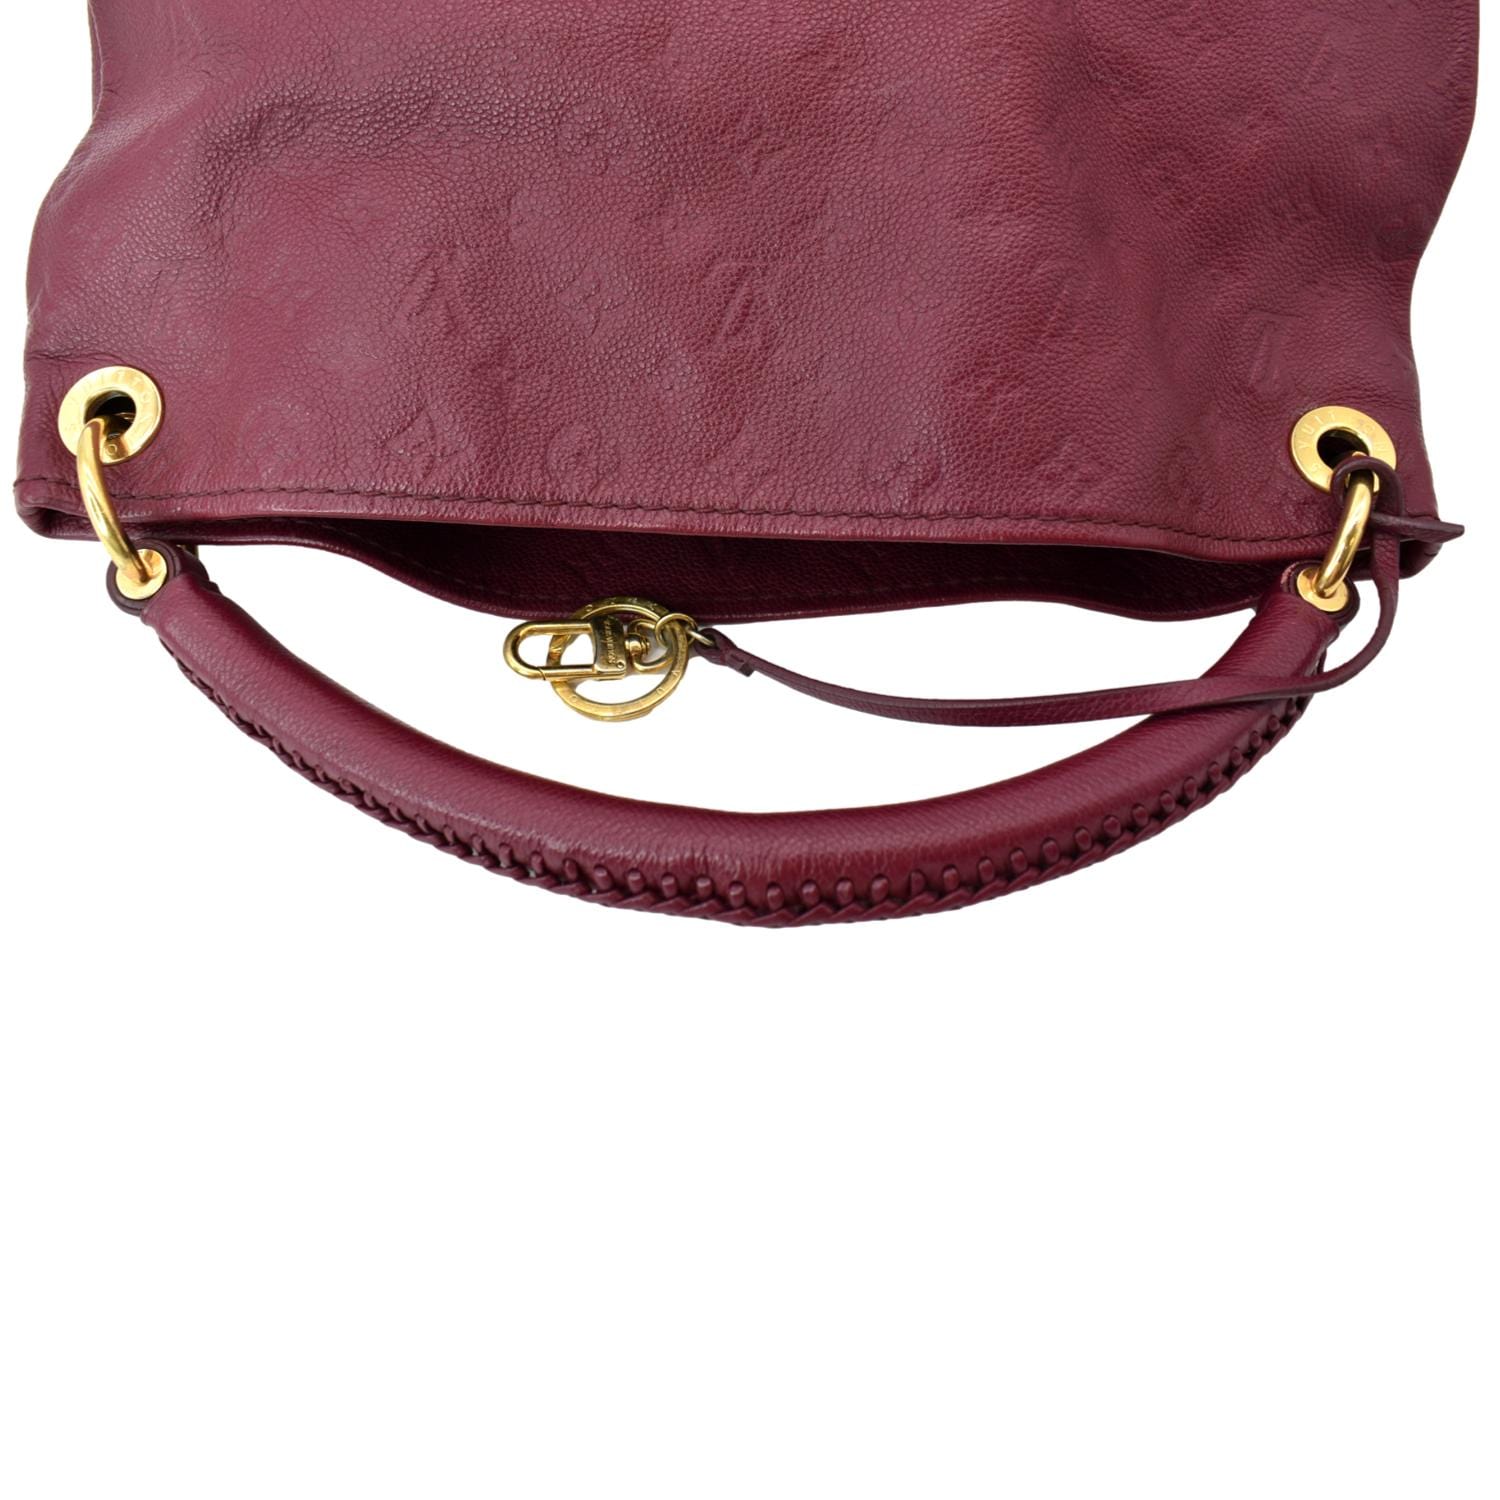 LOUIS VUITTON MONOGRAM Empreinte Artsy MM Dark Red Handbag Tote Bag #16  Rise-on